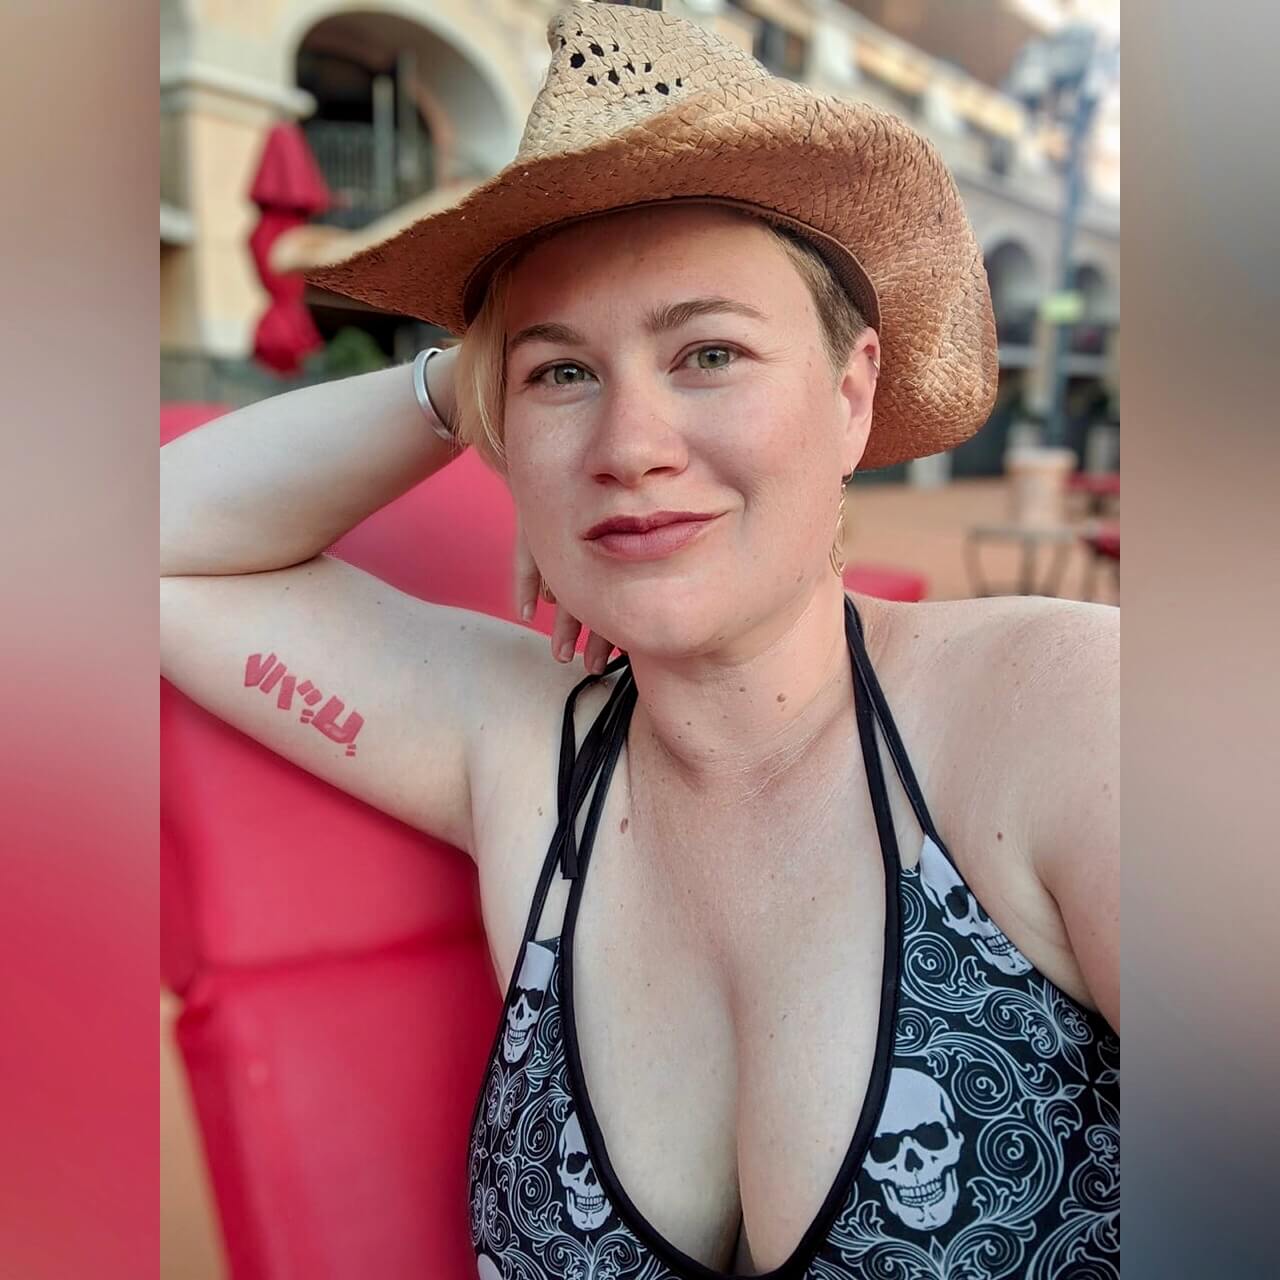 woman in cowboy hat and tattoo wearing skeleton wallpaper bikini top